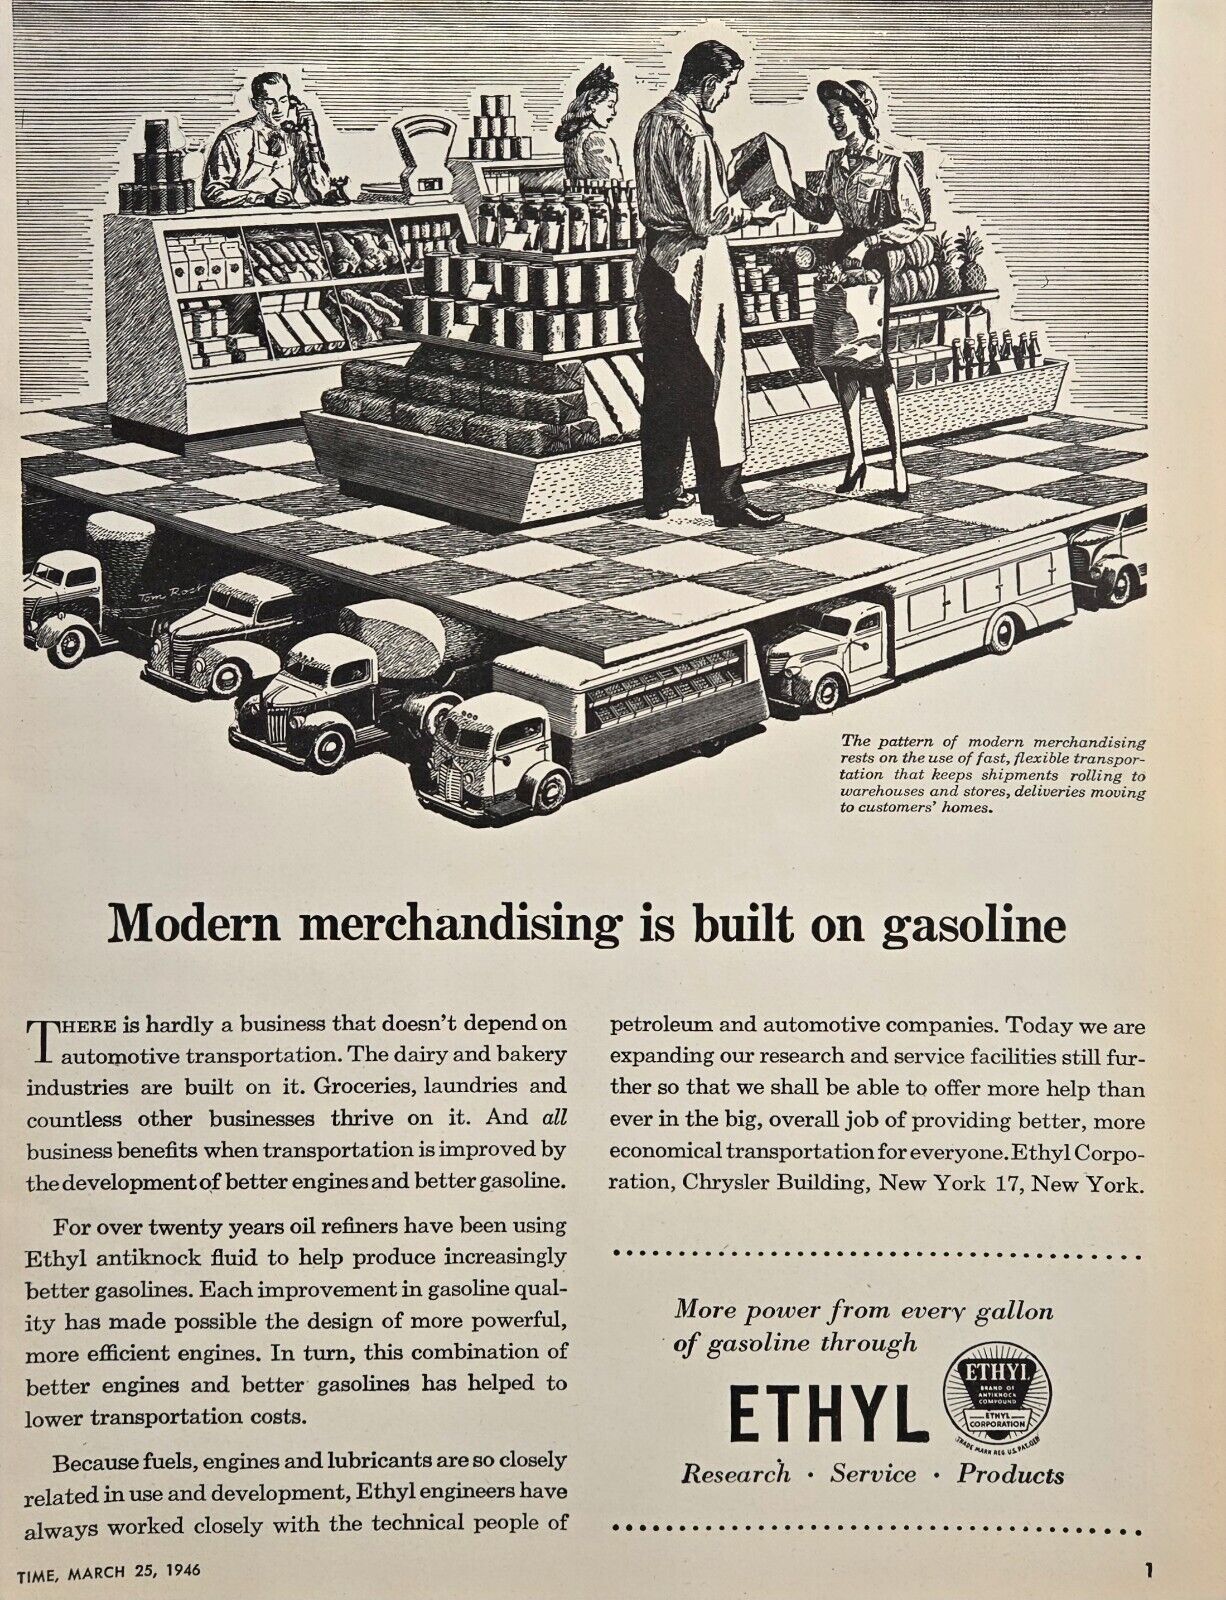 1946 VINTAGE PRINT AD - ETHYL CORP. AD - MODERN MERCHANDISING  BUILT ON GASOLINE